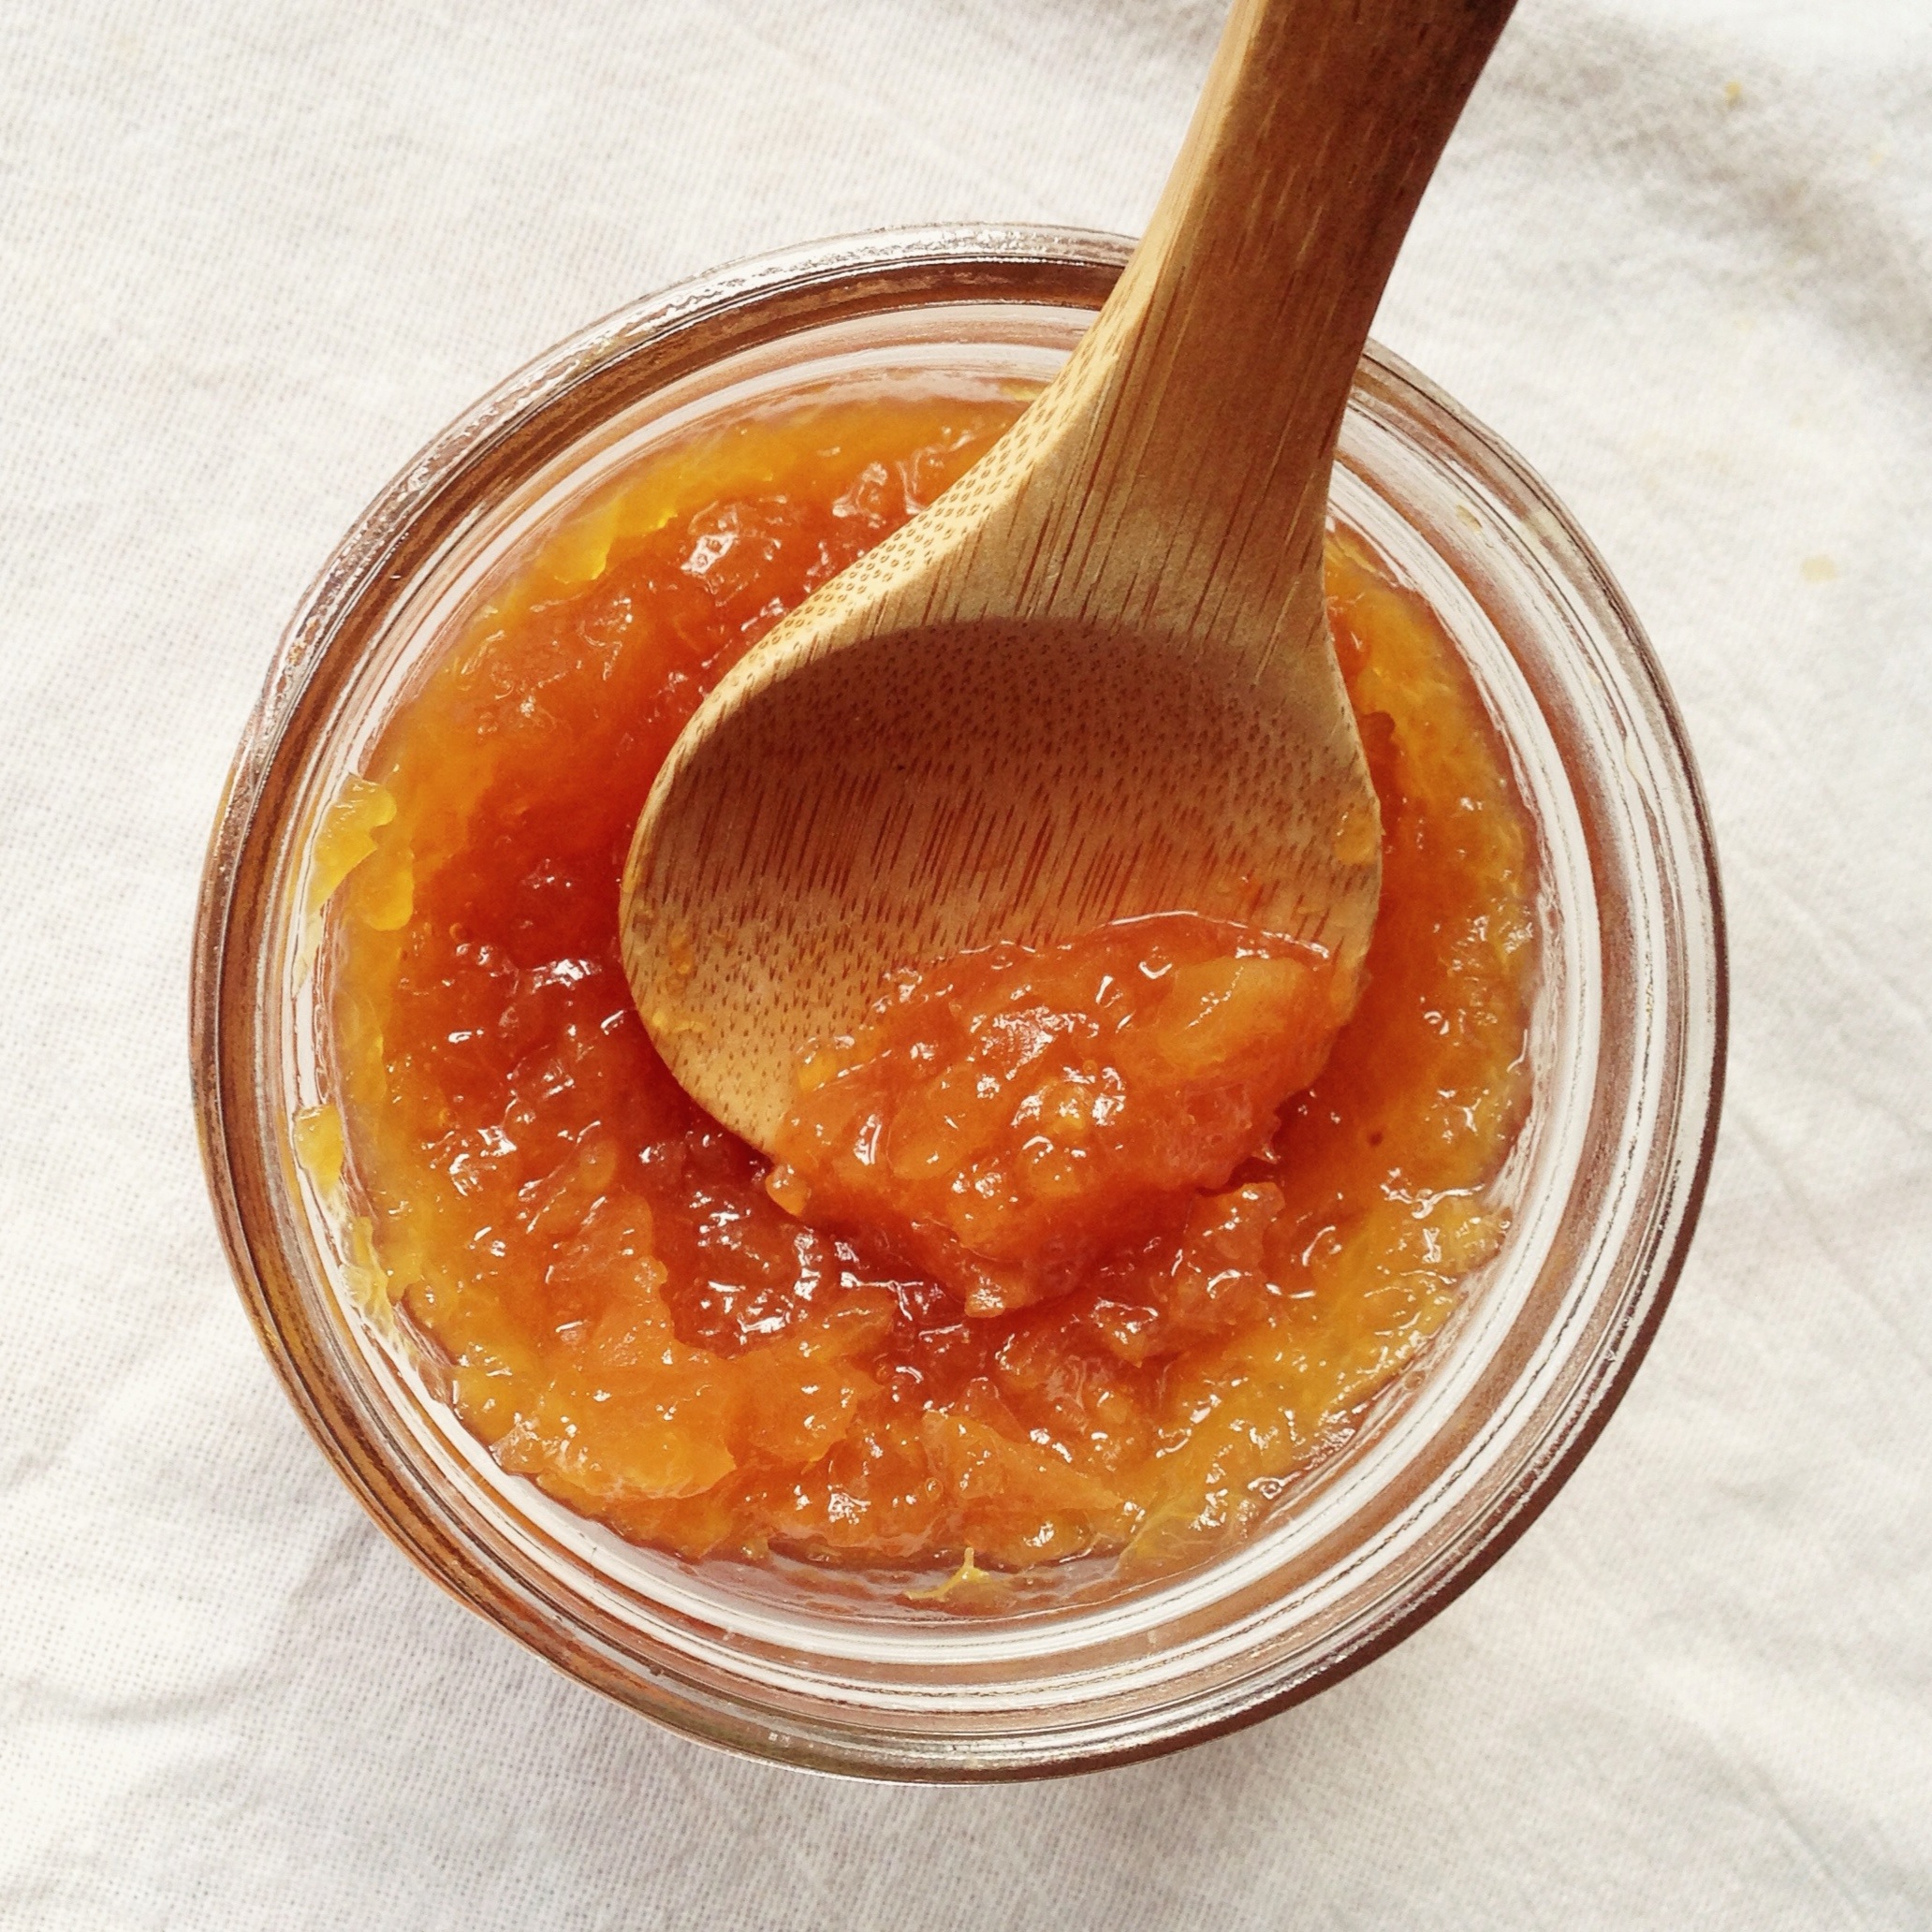 Grapefruit jam or marmalade sweetened with honey